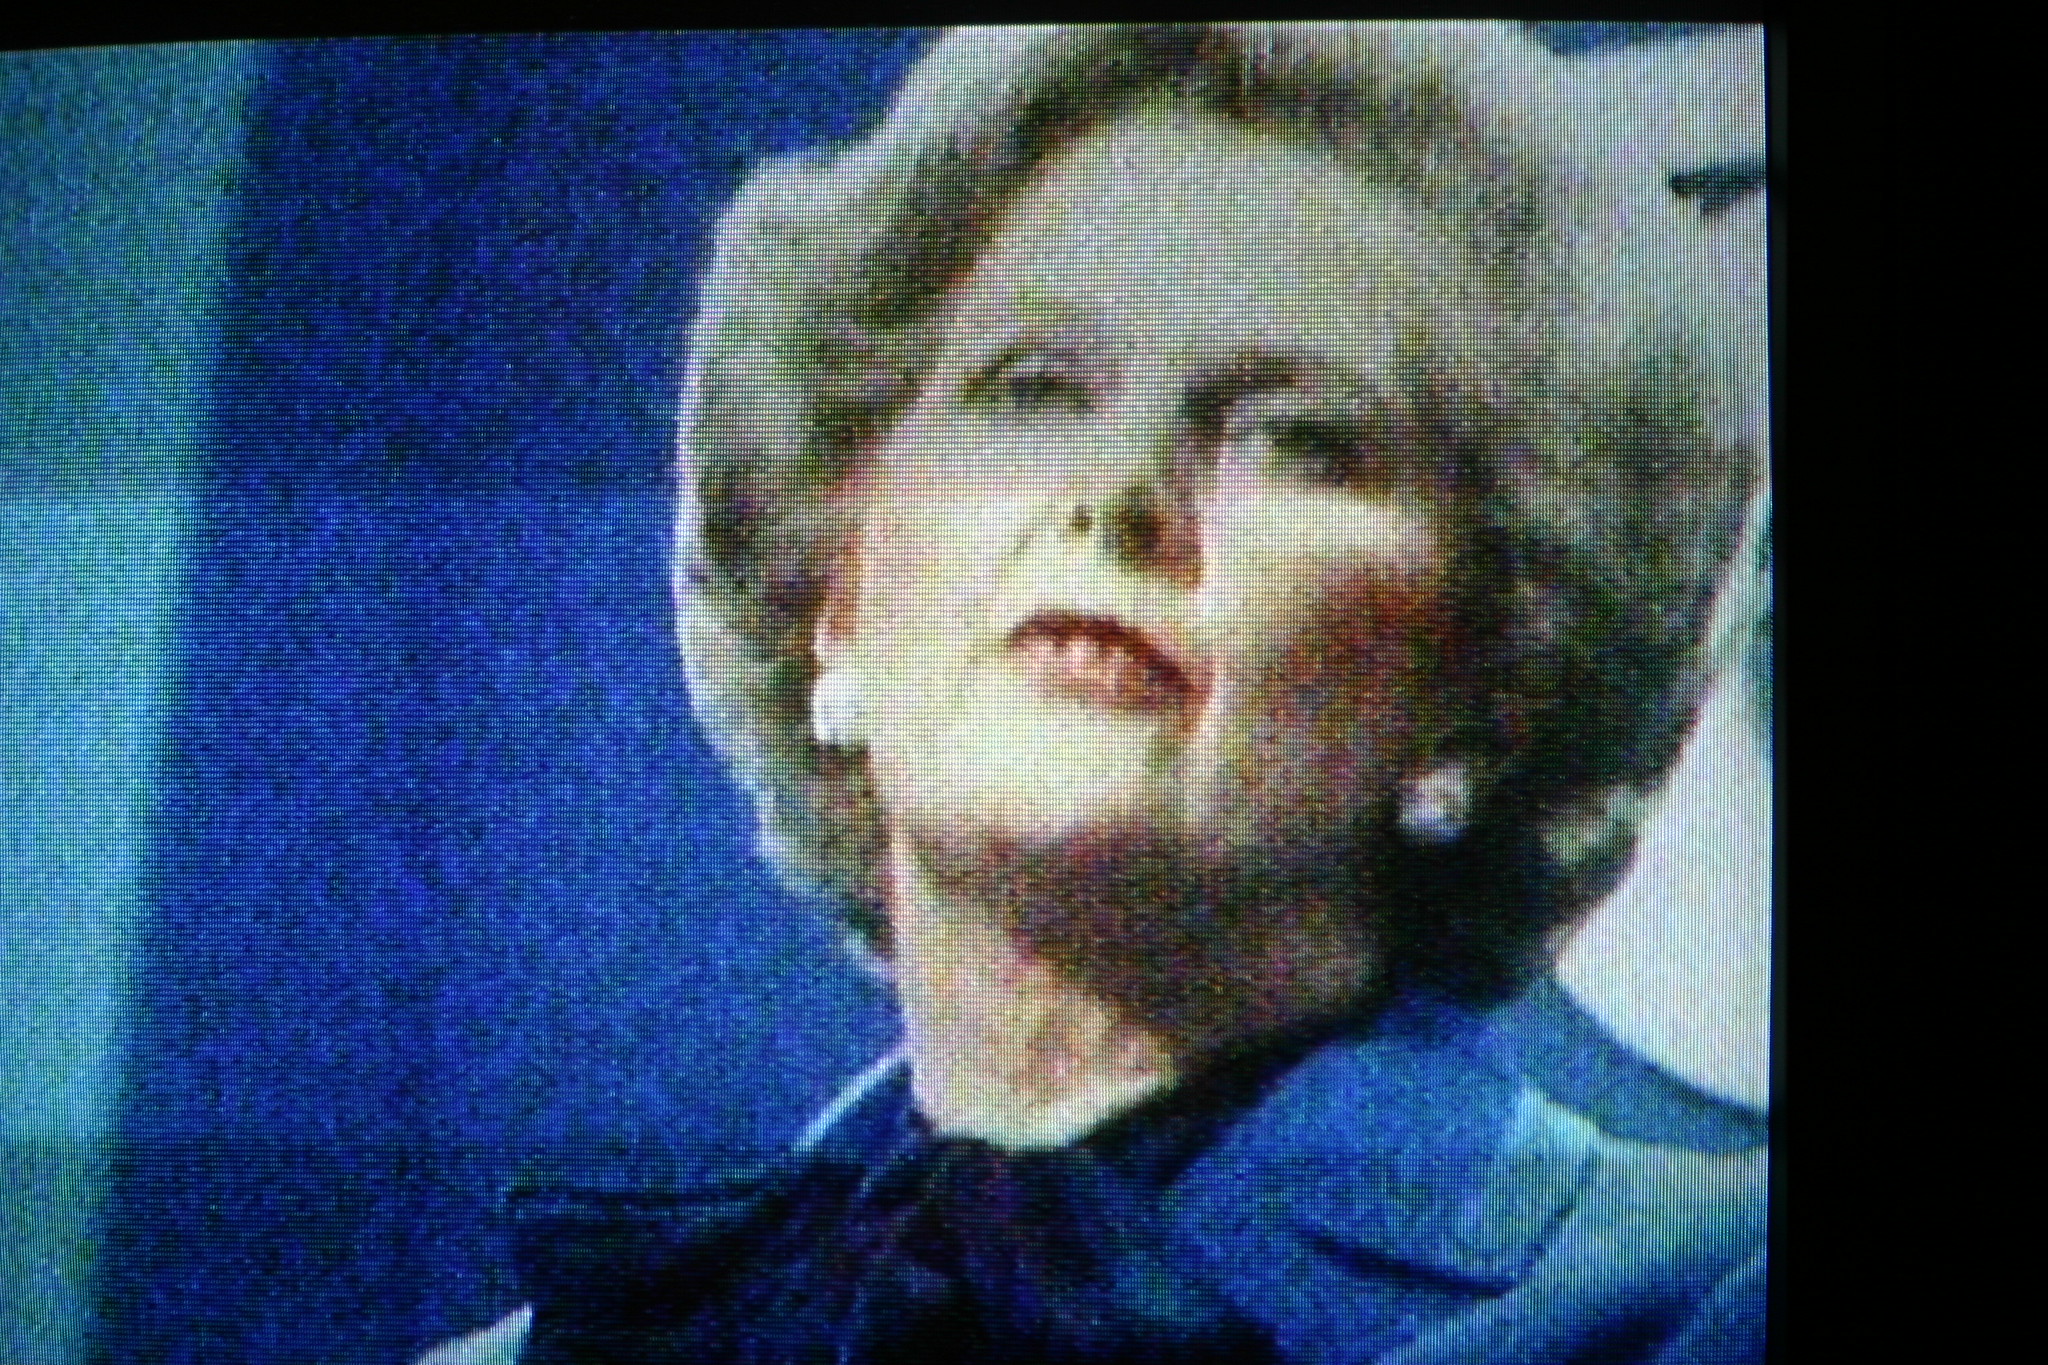 Margaret Thatcher on TV